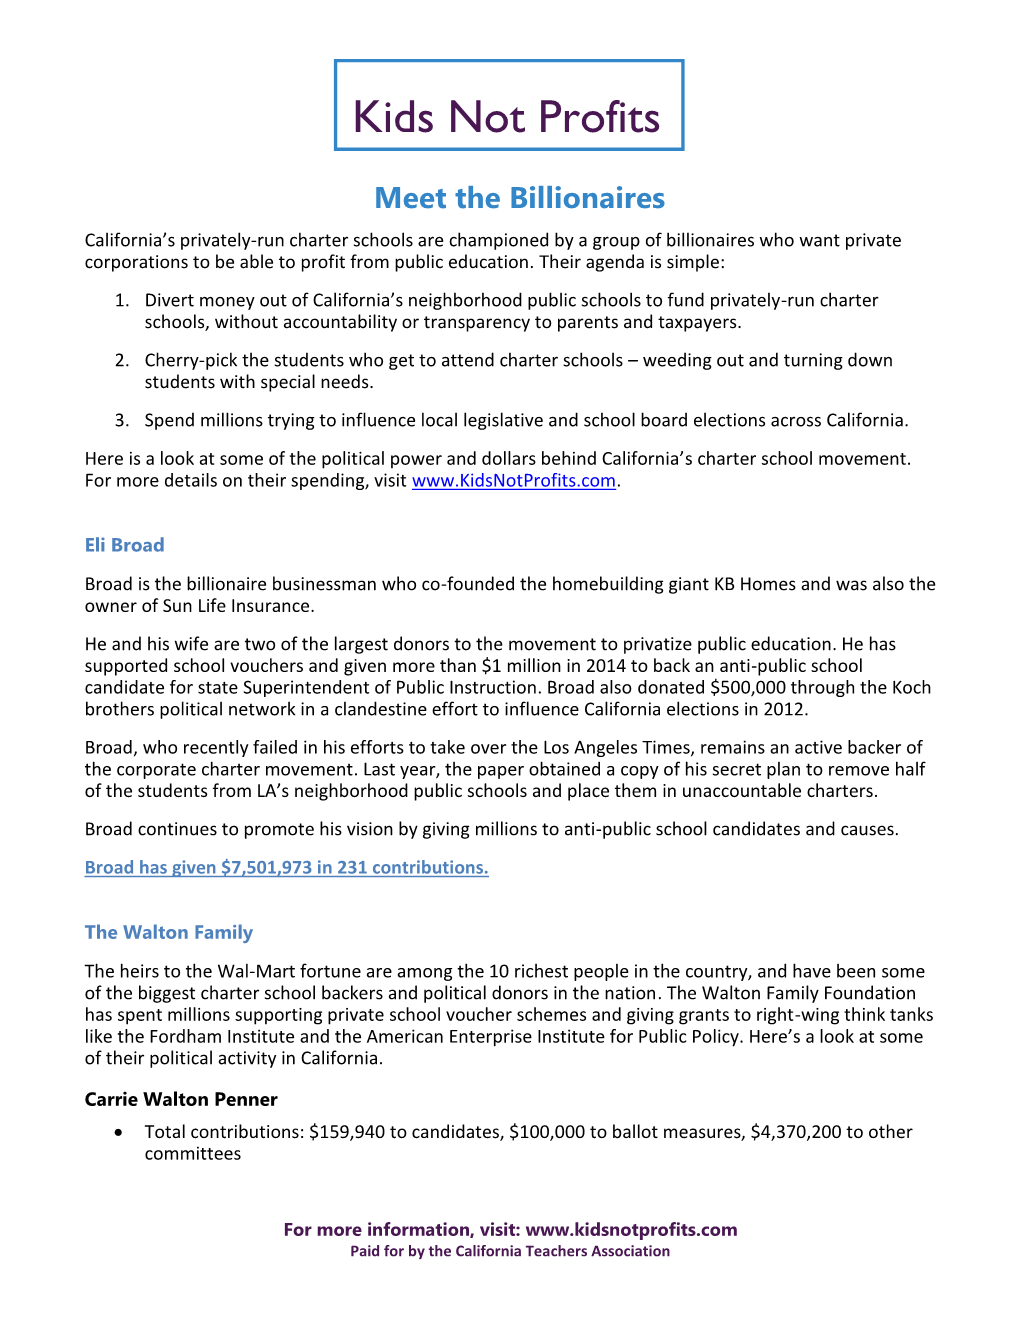 Meet the Billionaires